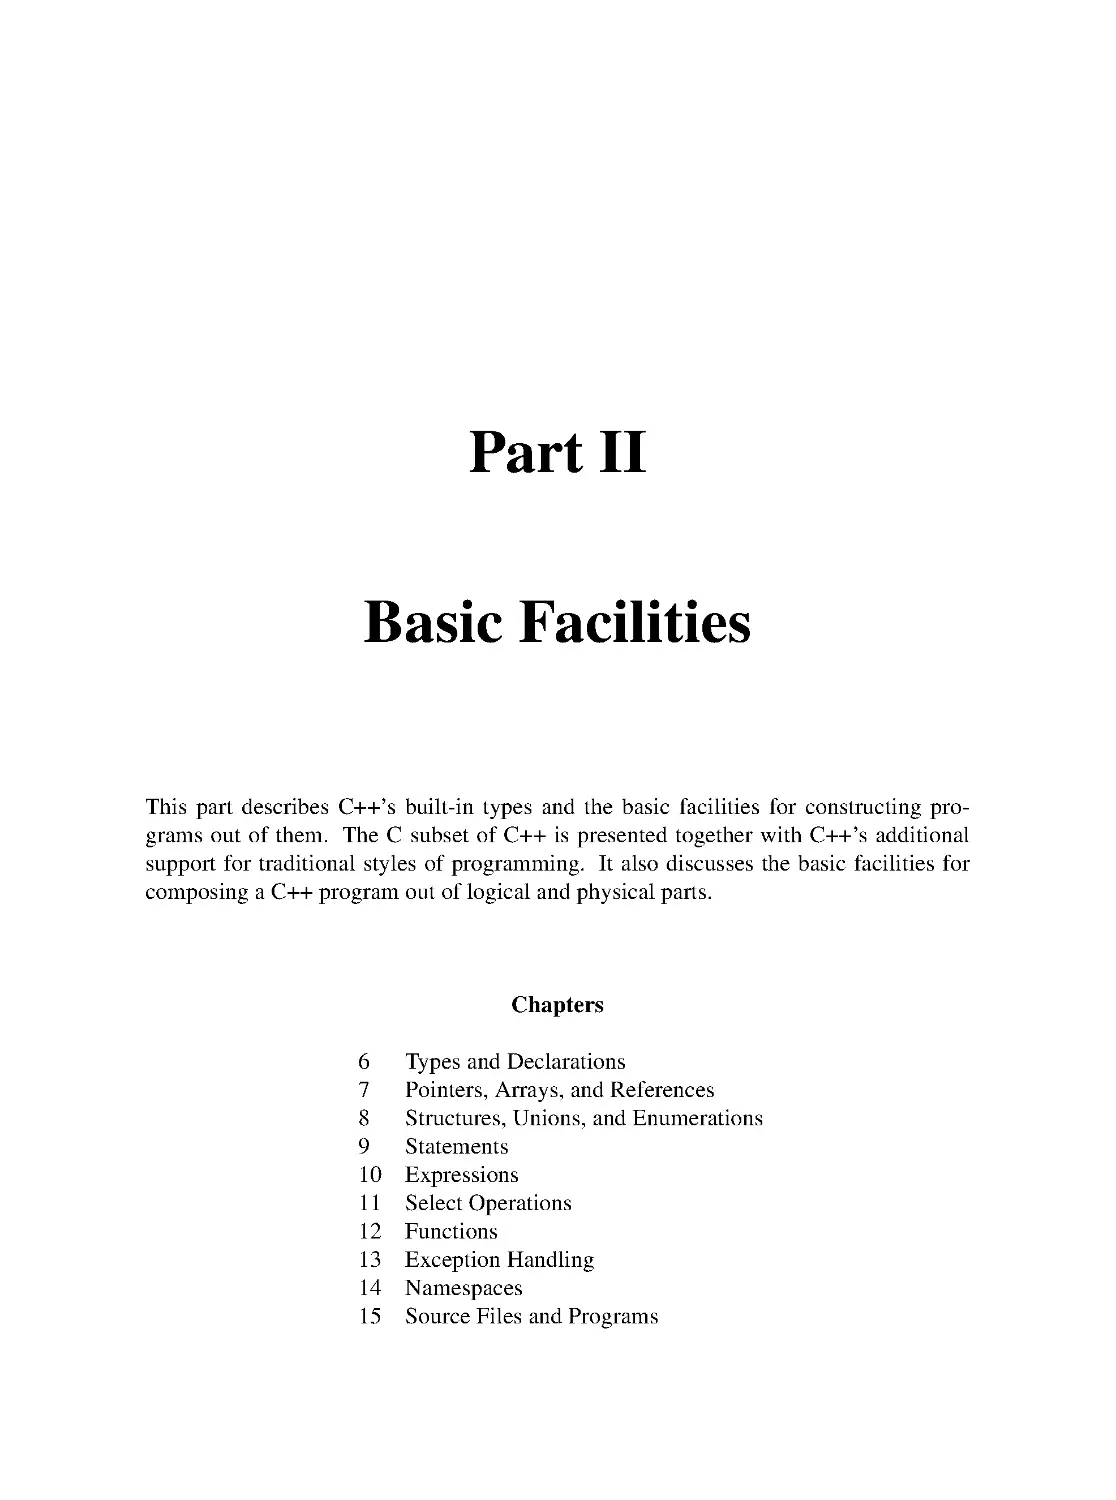 Part II: Basic Facilities